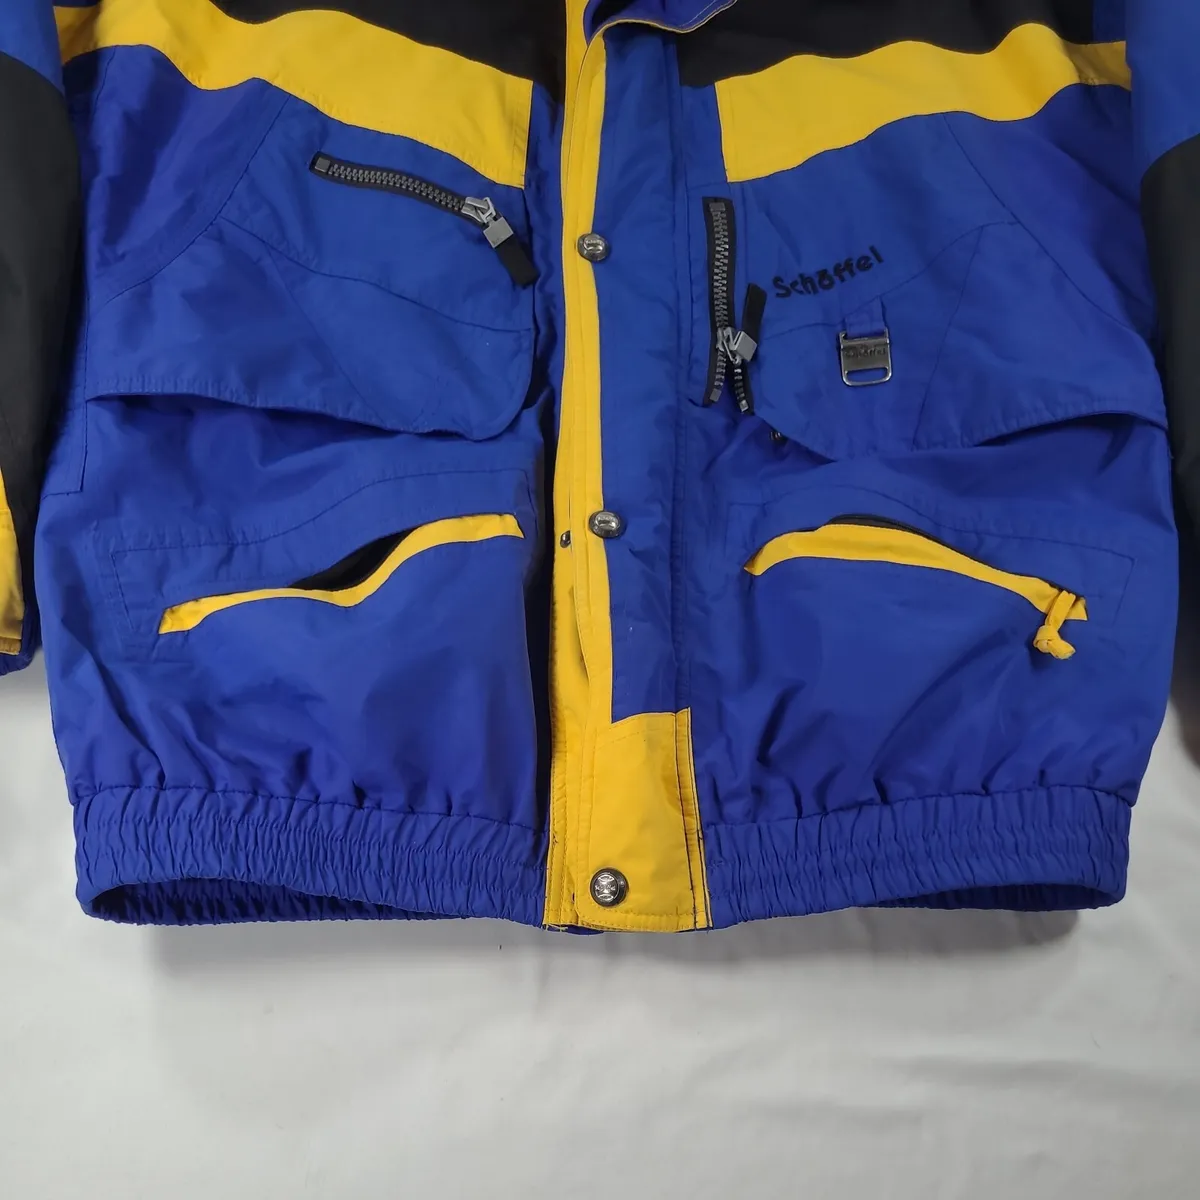 Schoffel Gore-Tex Men’s Ski Jacket Blue Yellow Sz 44 Hooded Winter Coat